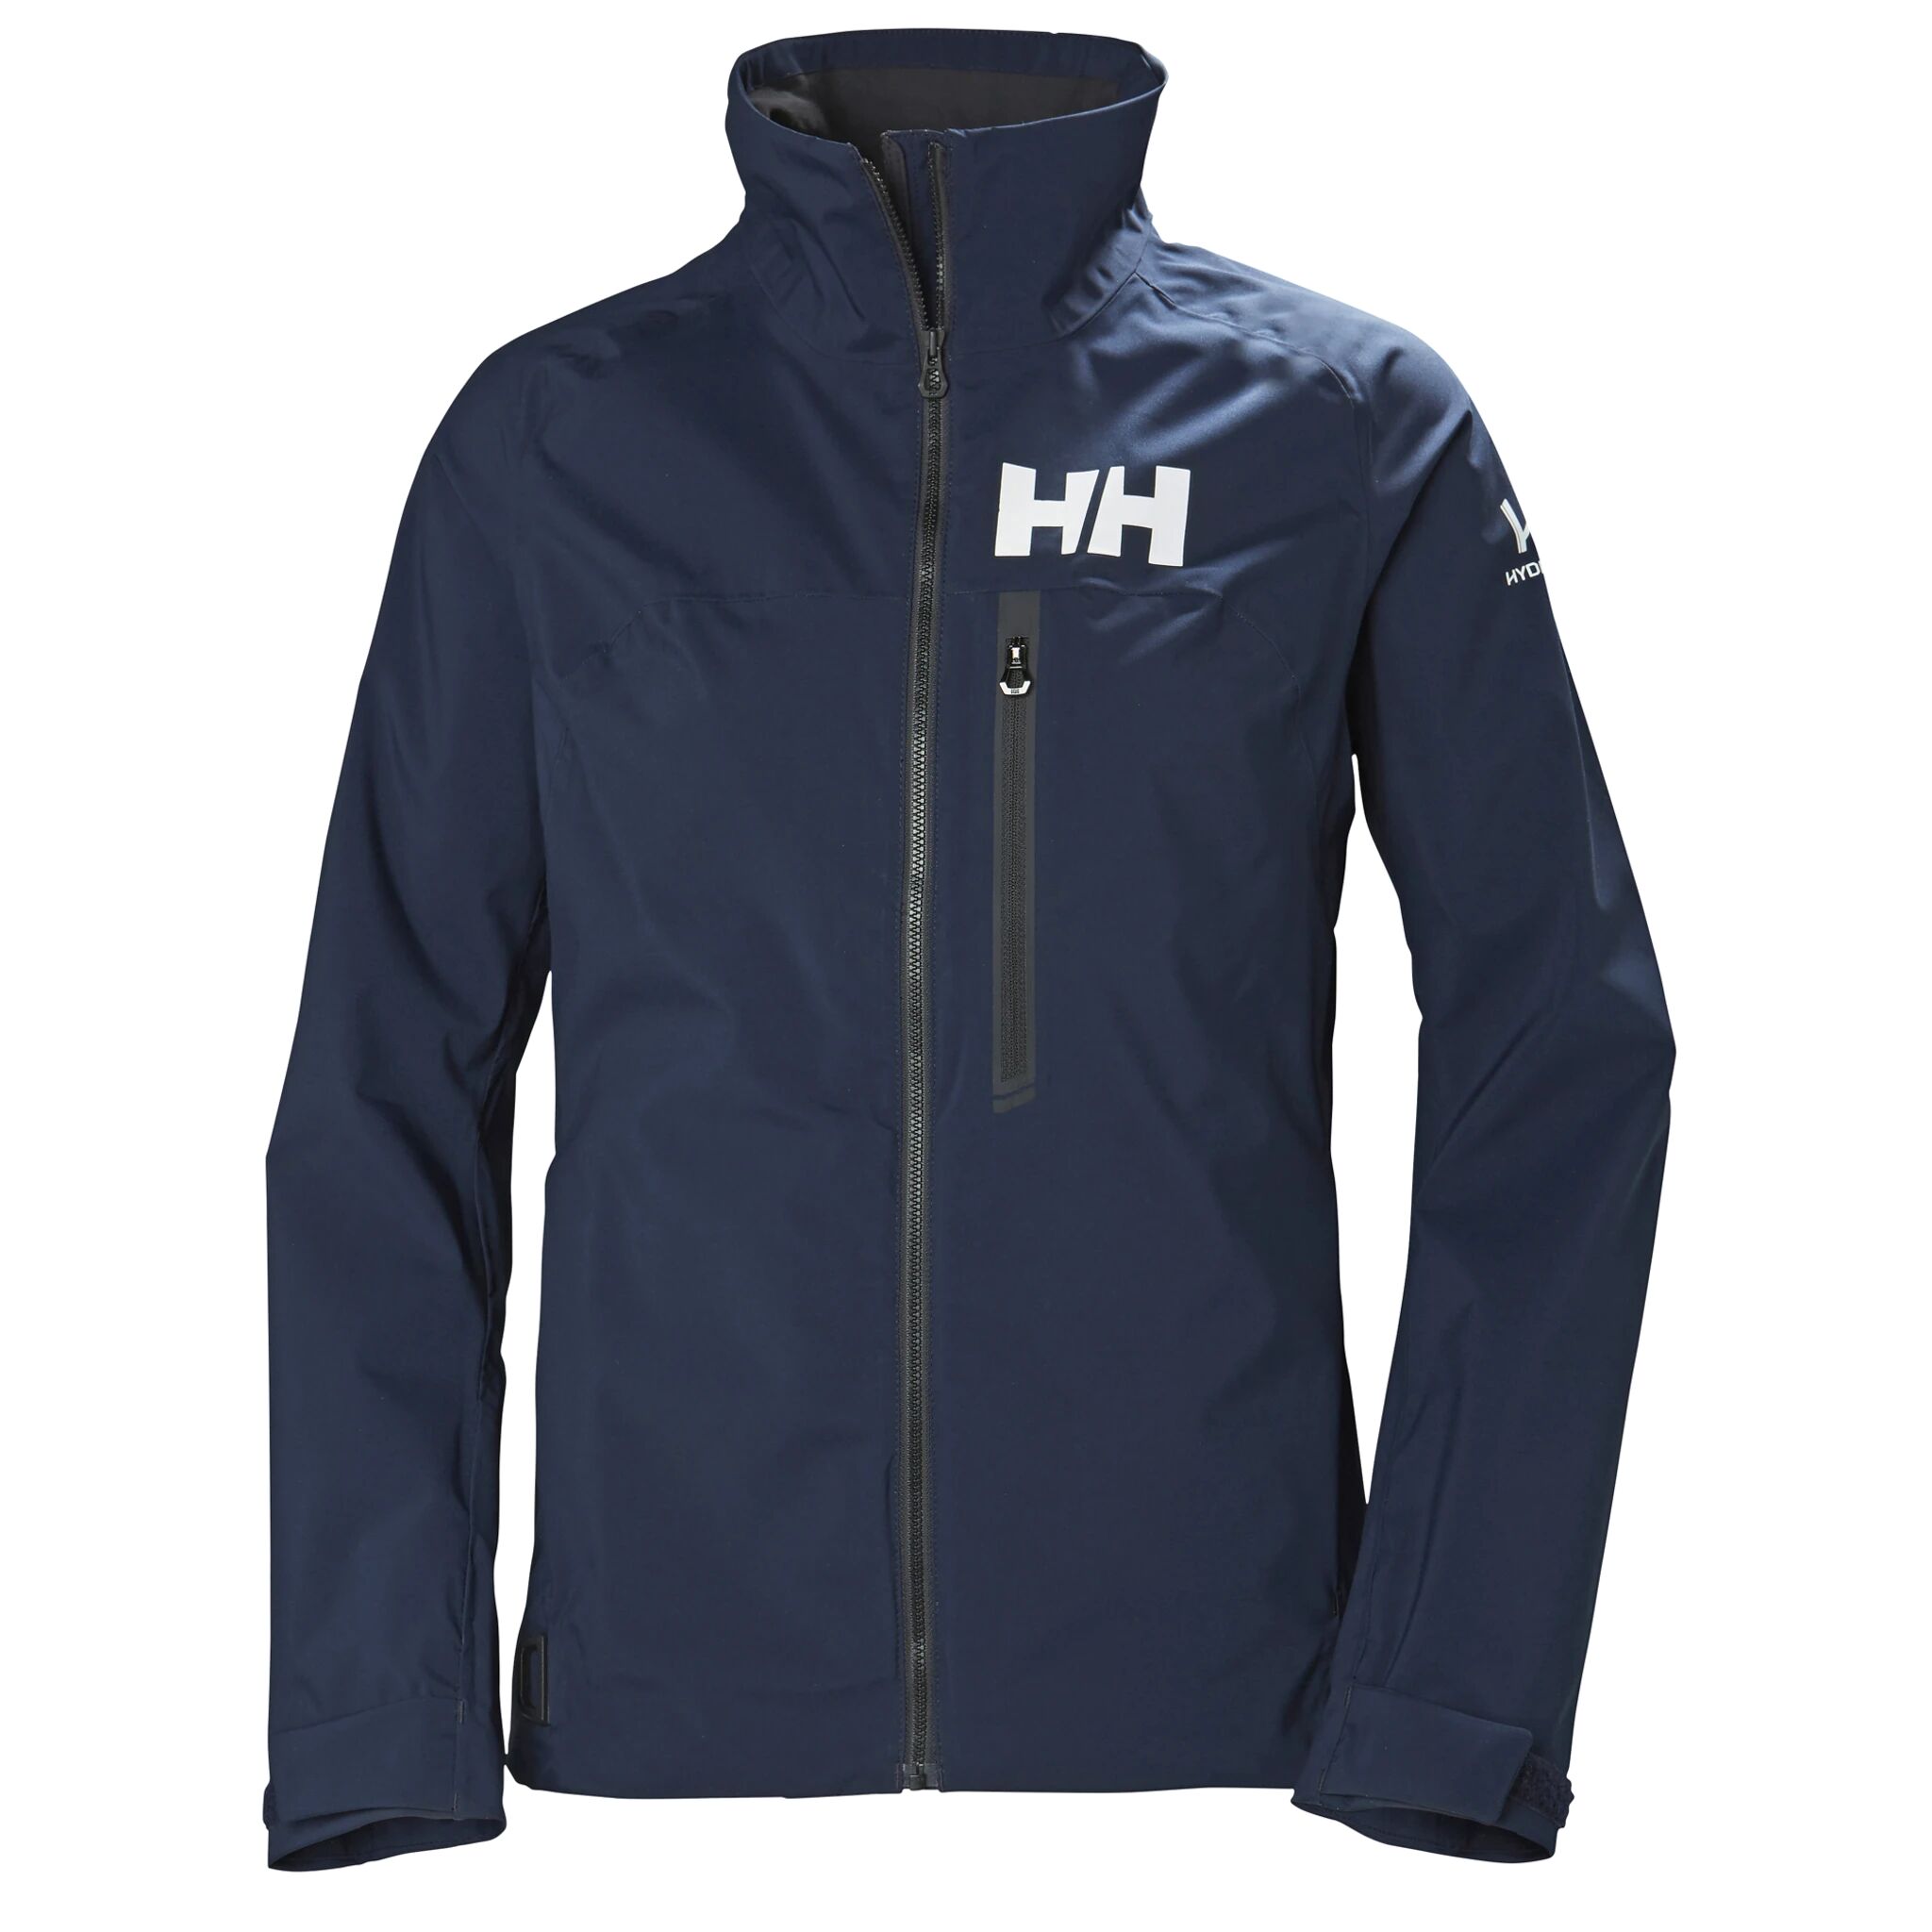 Helly Hansen HP Racing Jacket, seilerjakke dame XS 597 NAVY